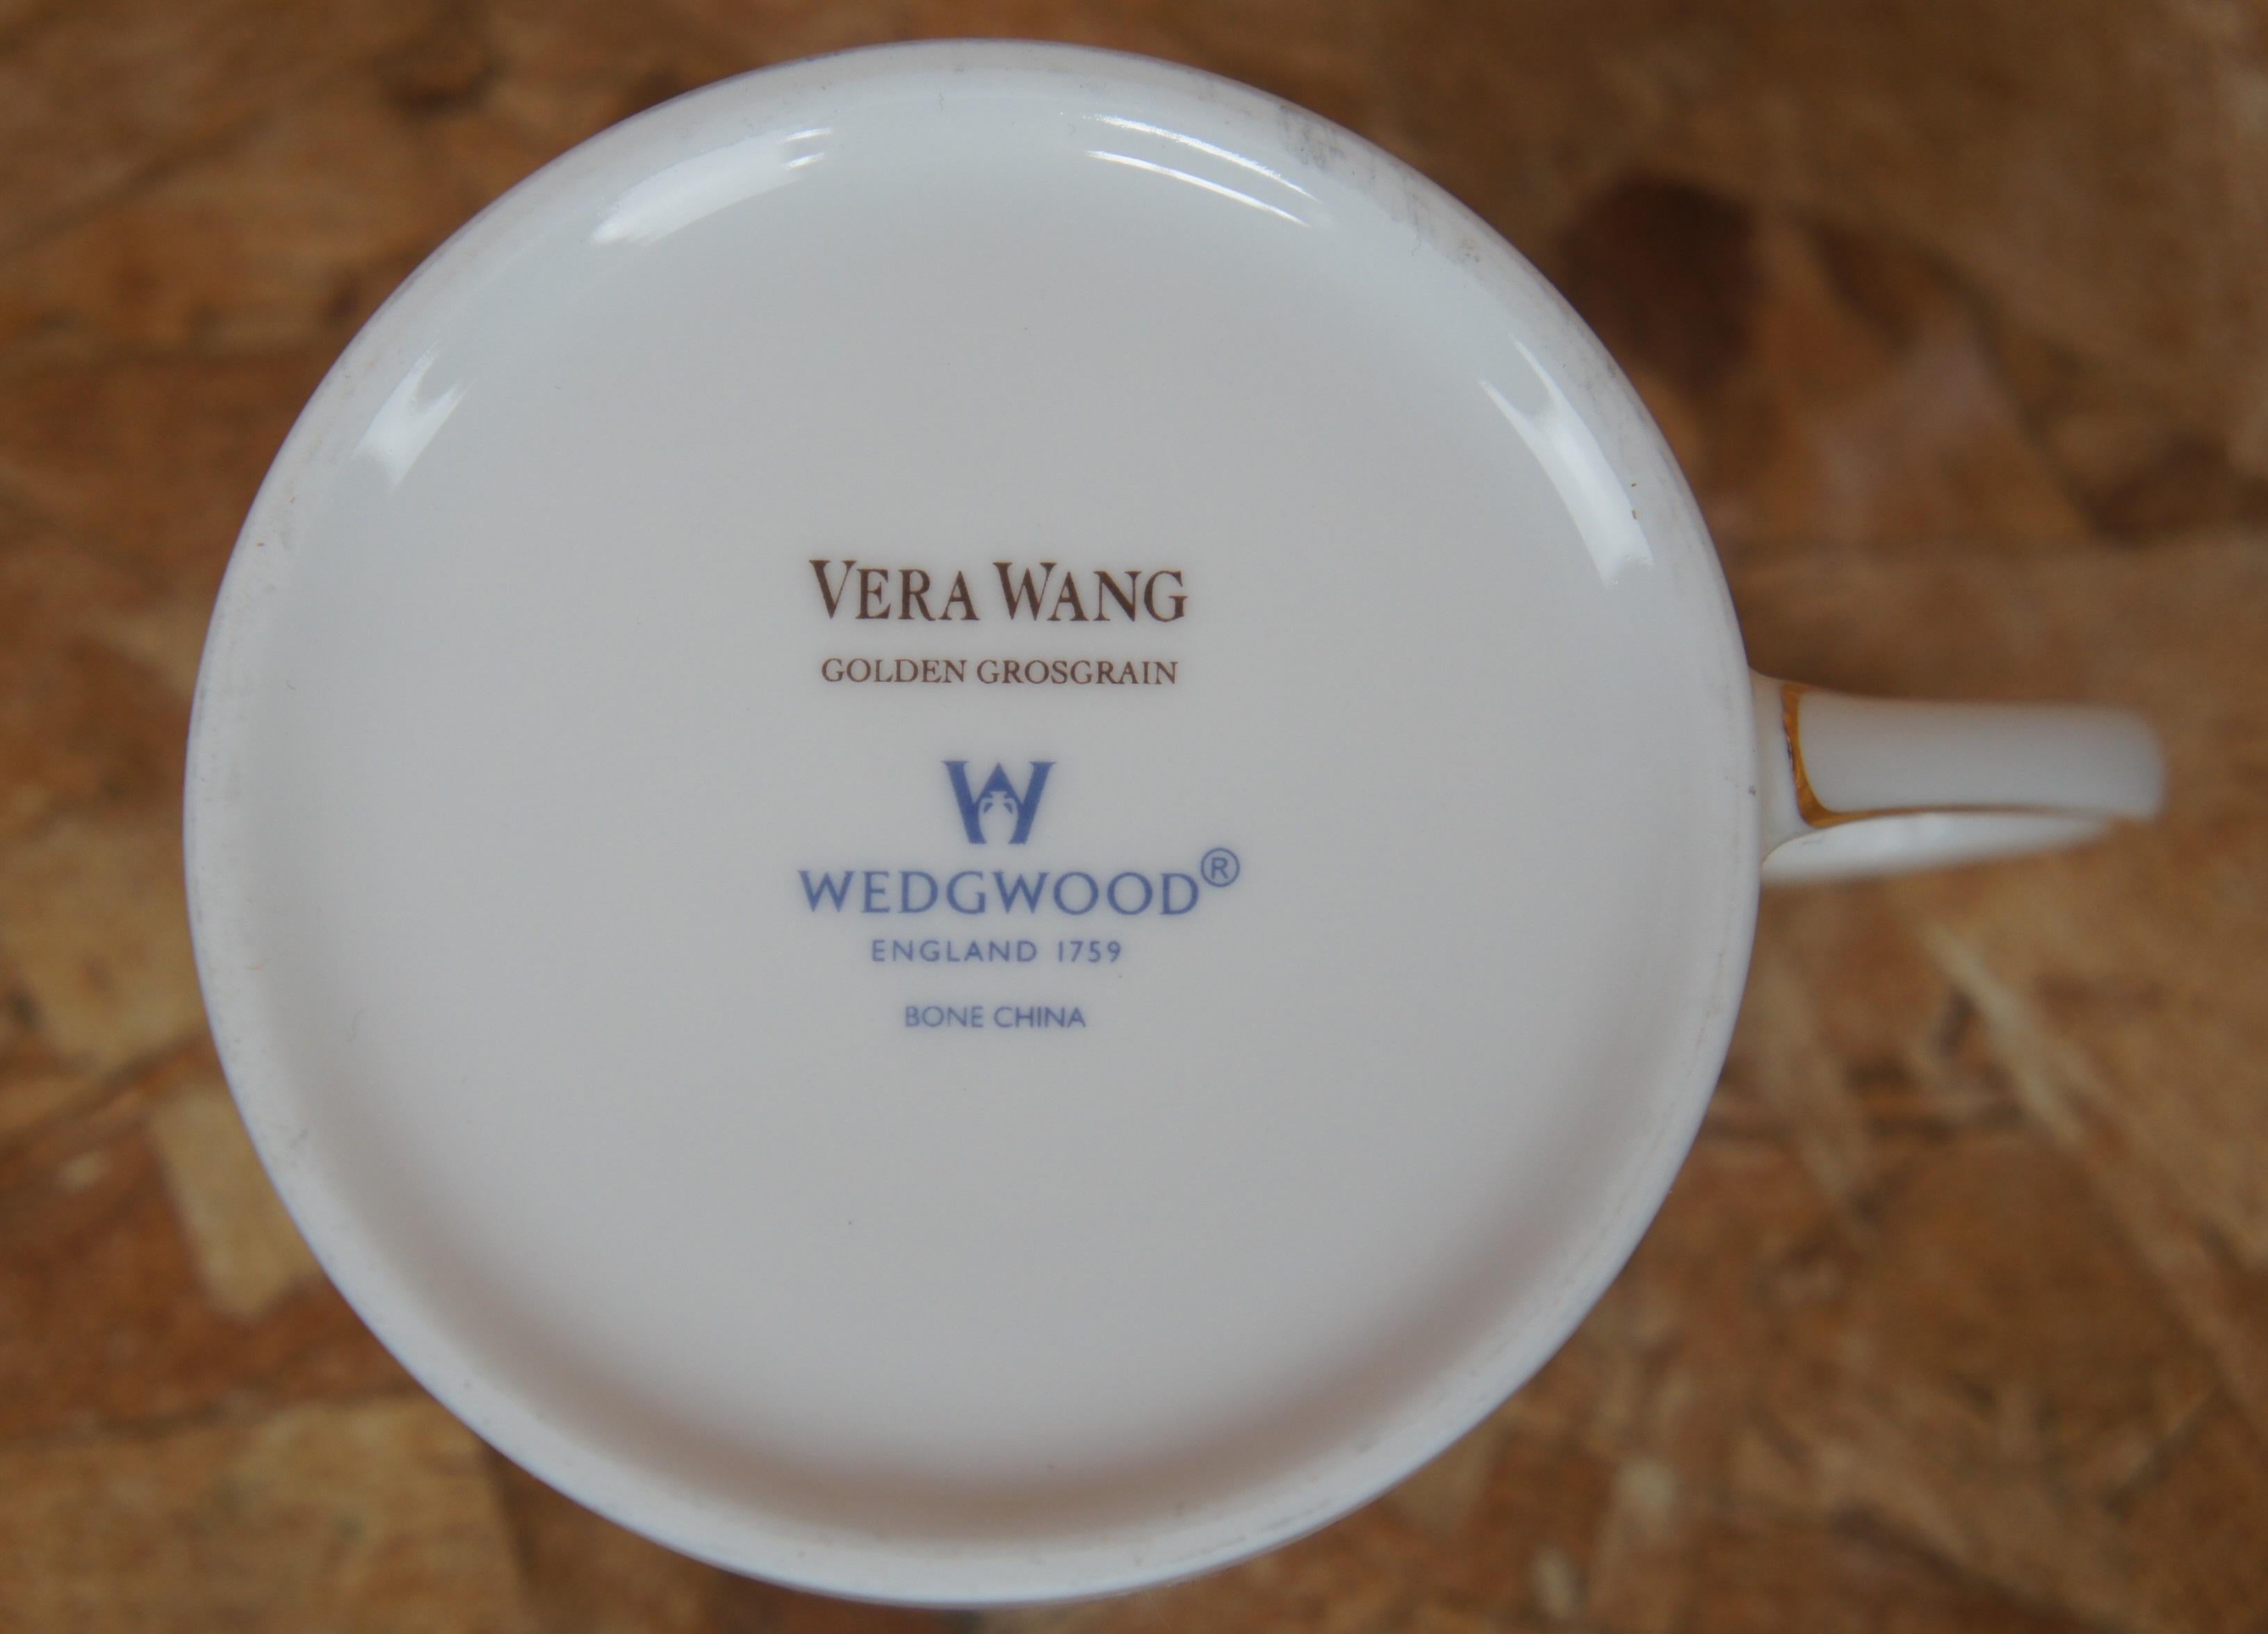 Like New 40 pc Vera Wang Wedgwood Golden Grosgrain Fine China Plates Coffee 10